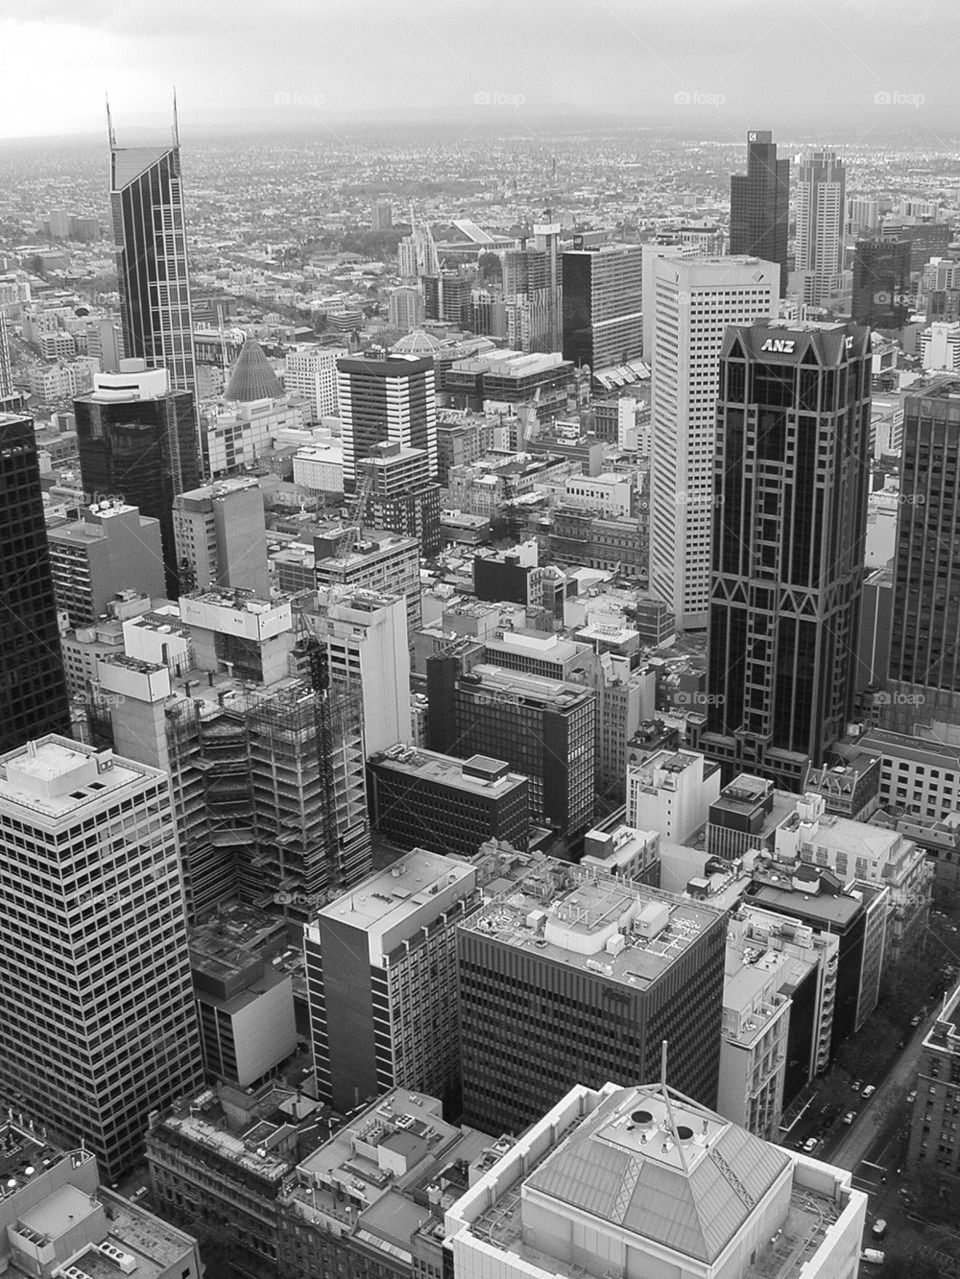 THE CITY OF MELBOURNE AUSTRALIA